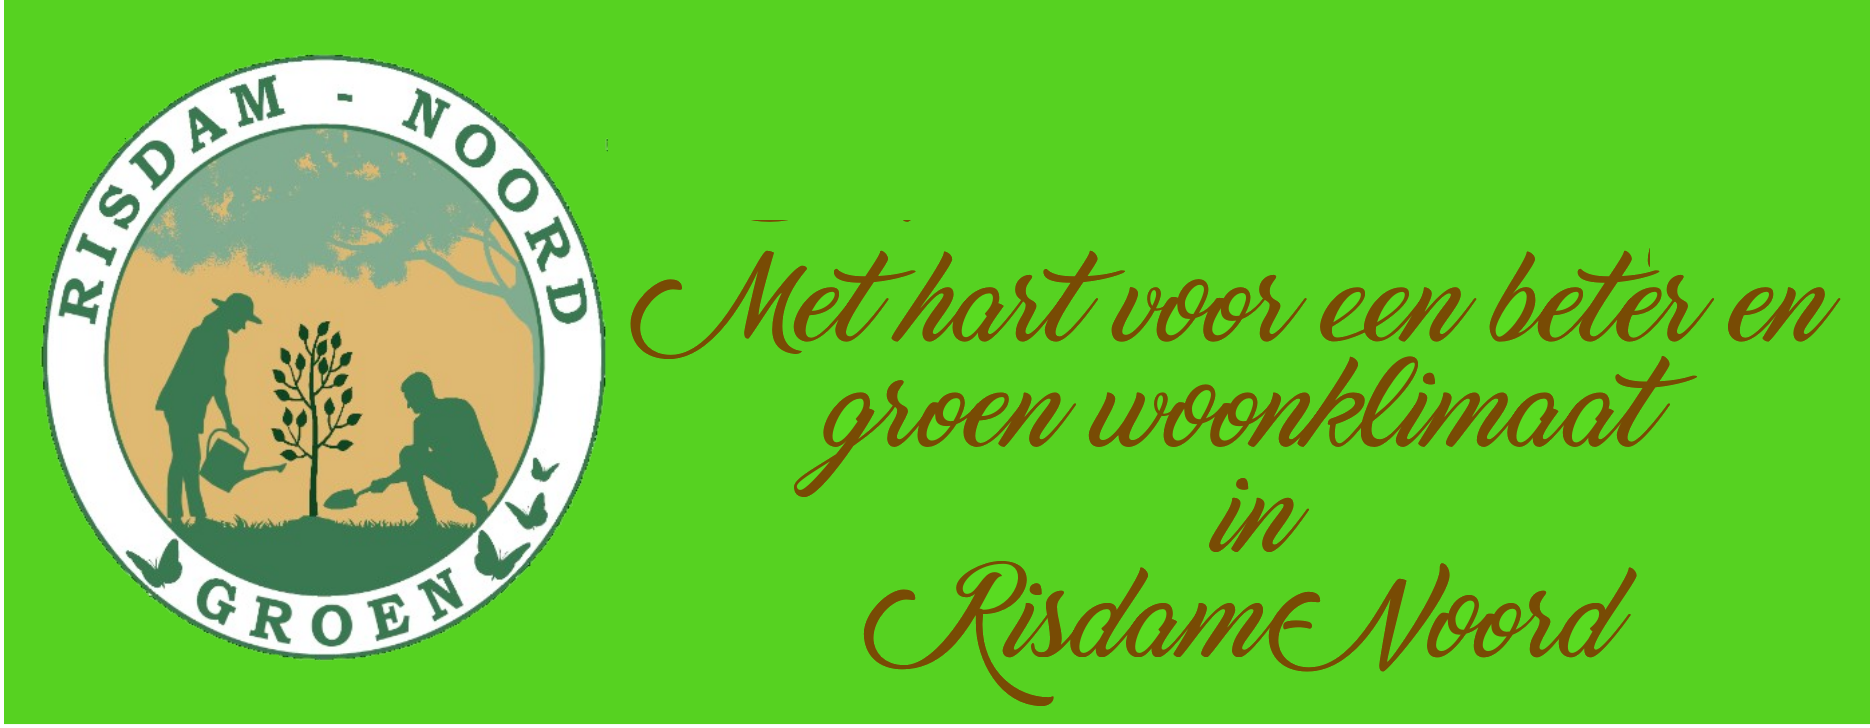 Logo Risdam-Noord Groen